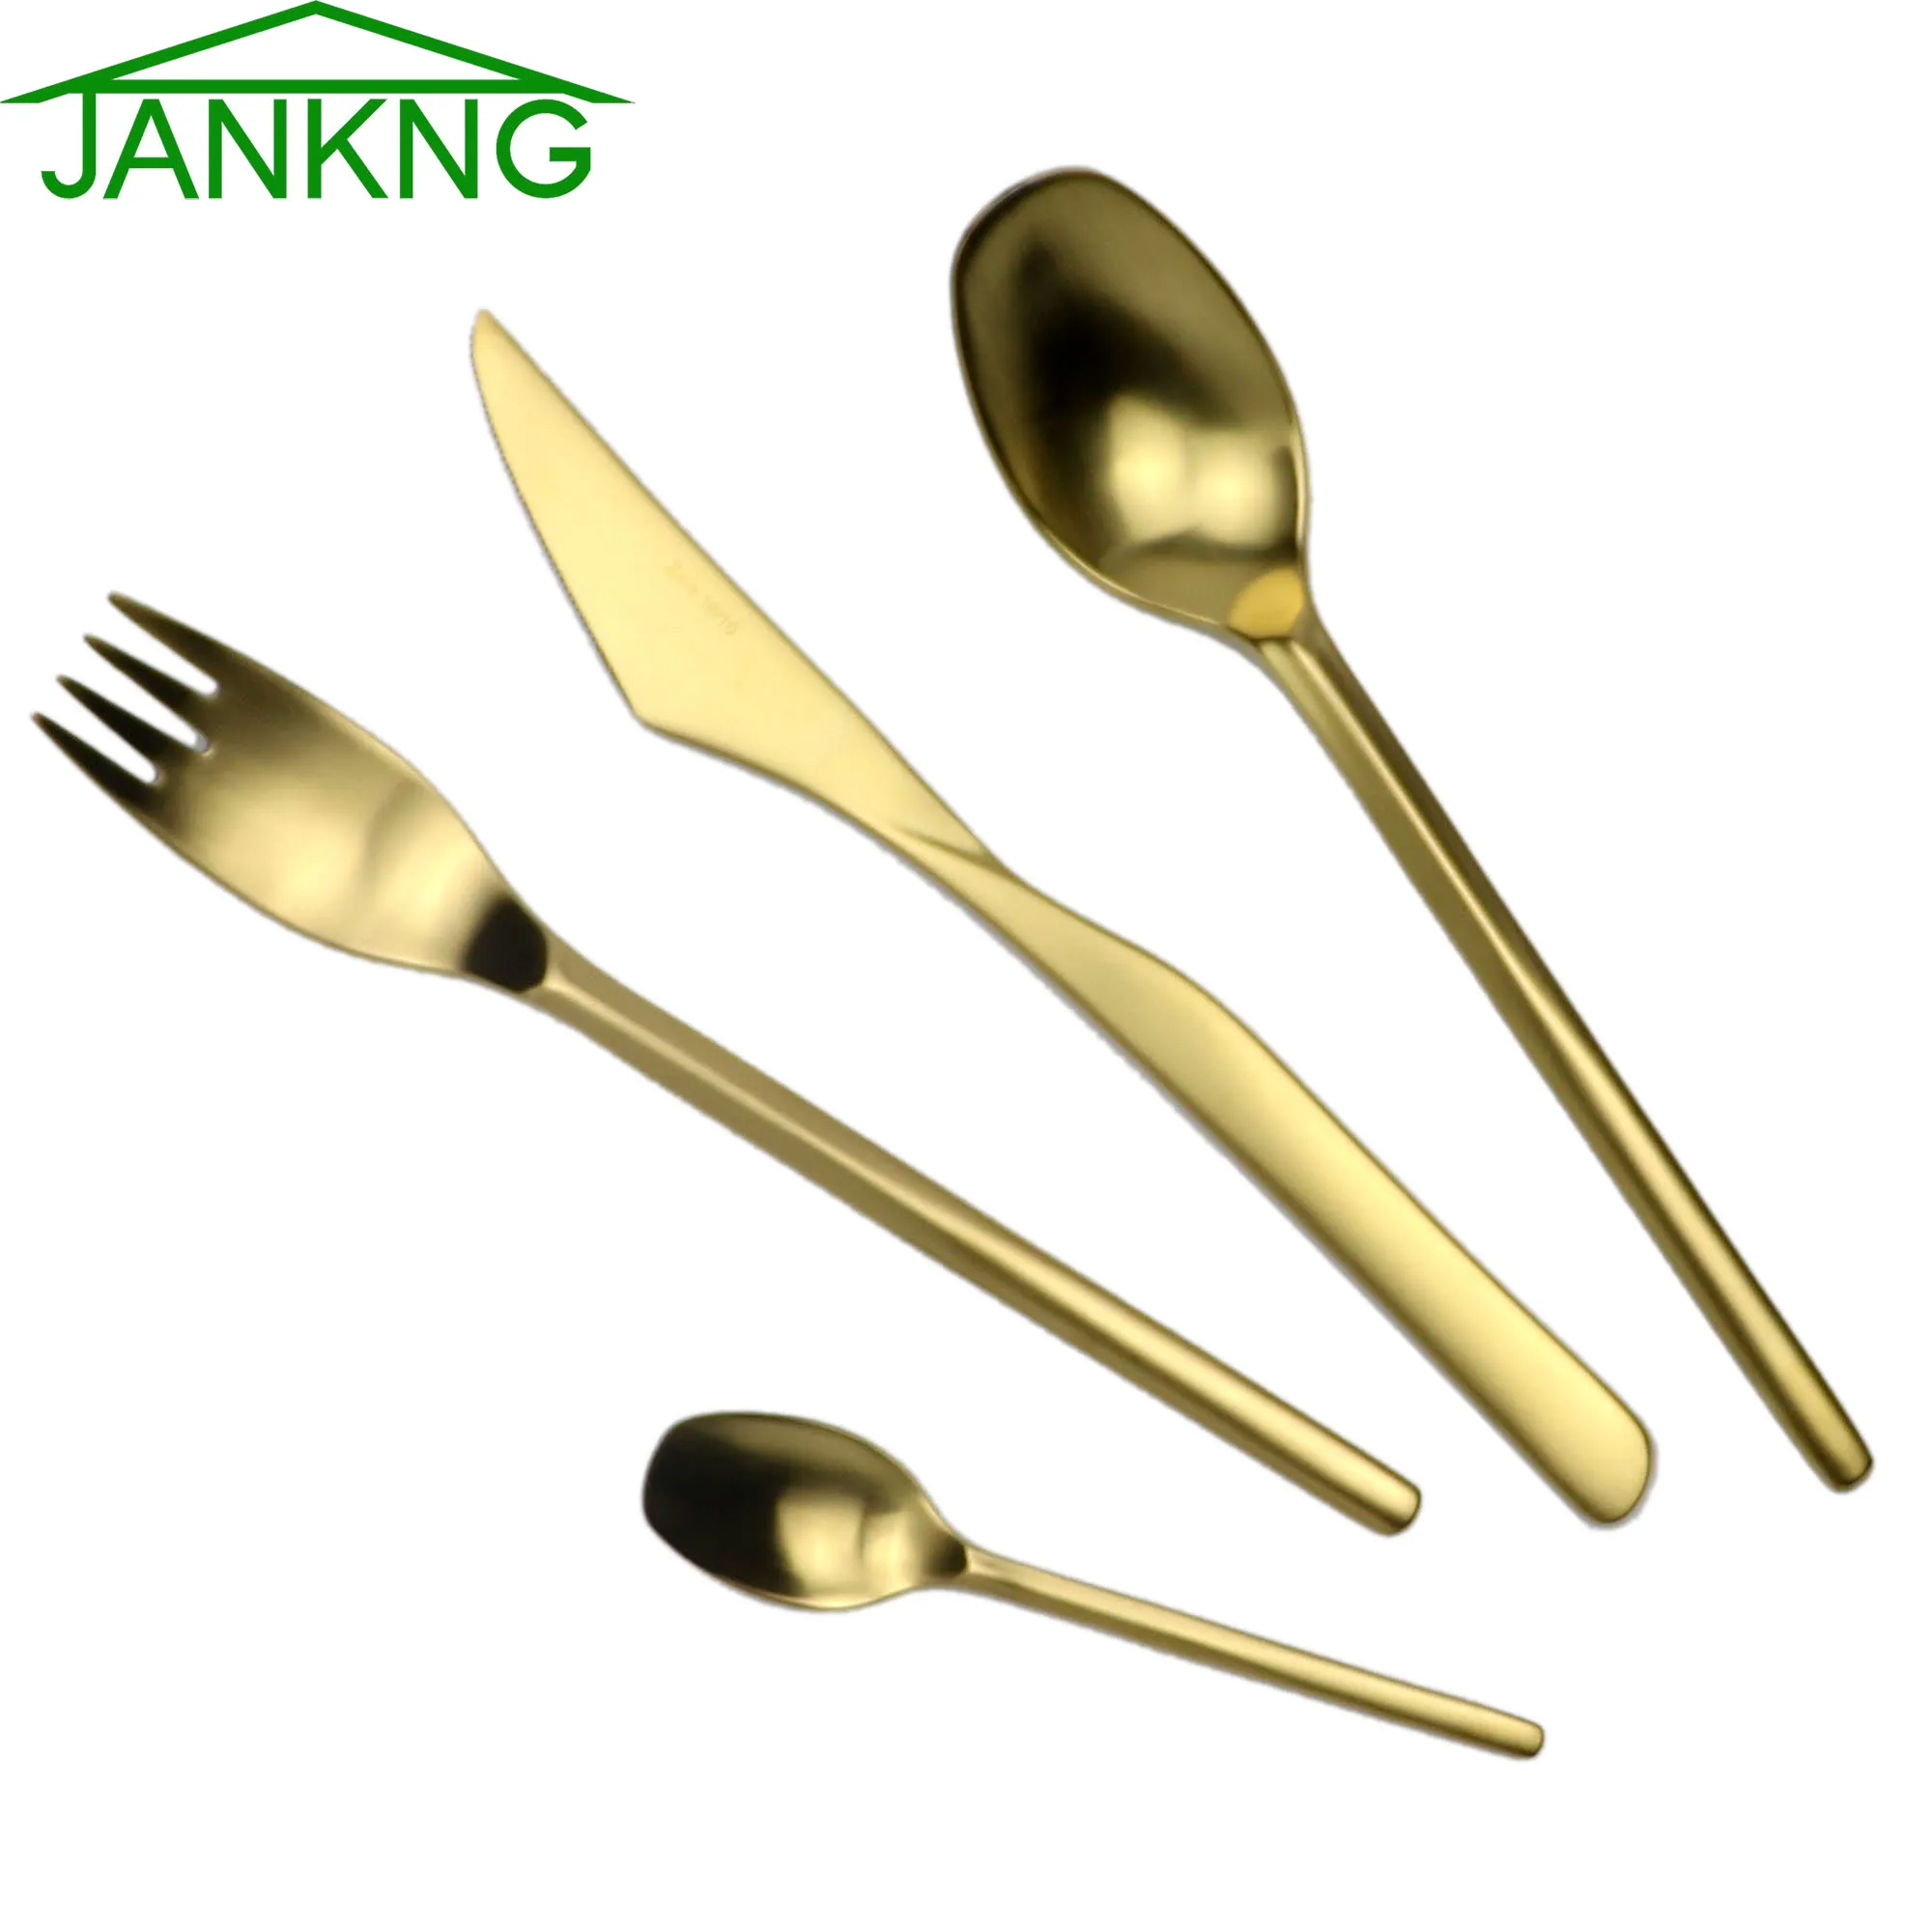 Jankng 24 PCS /ロット豪華ゴールドフラットウェアセットステンレススチールカトラリーセットキッチン食品ガテナイフフォークスプーン食器6